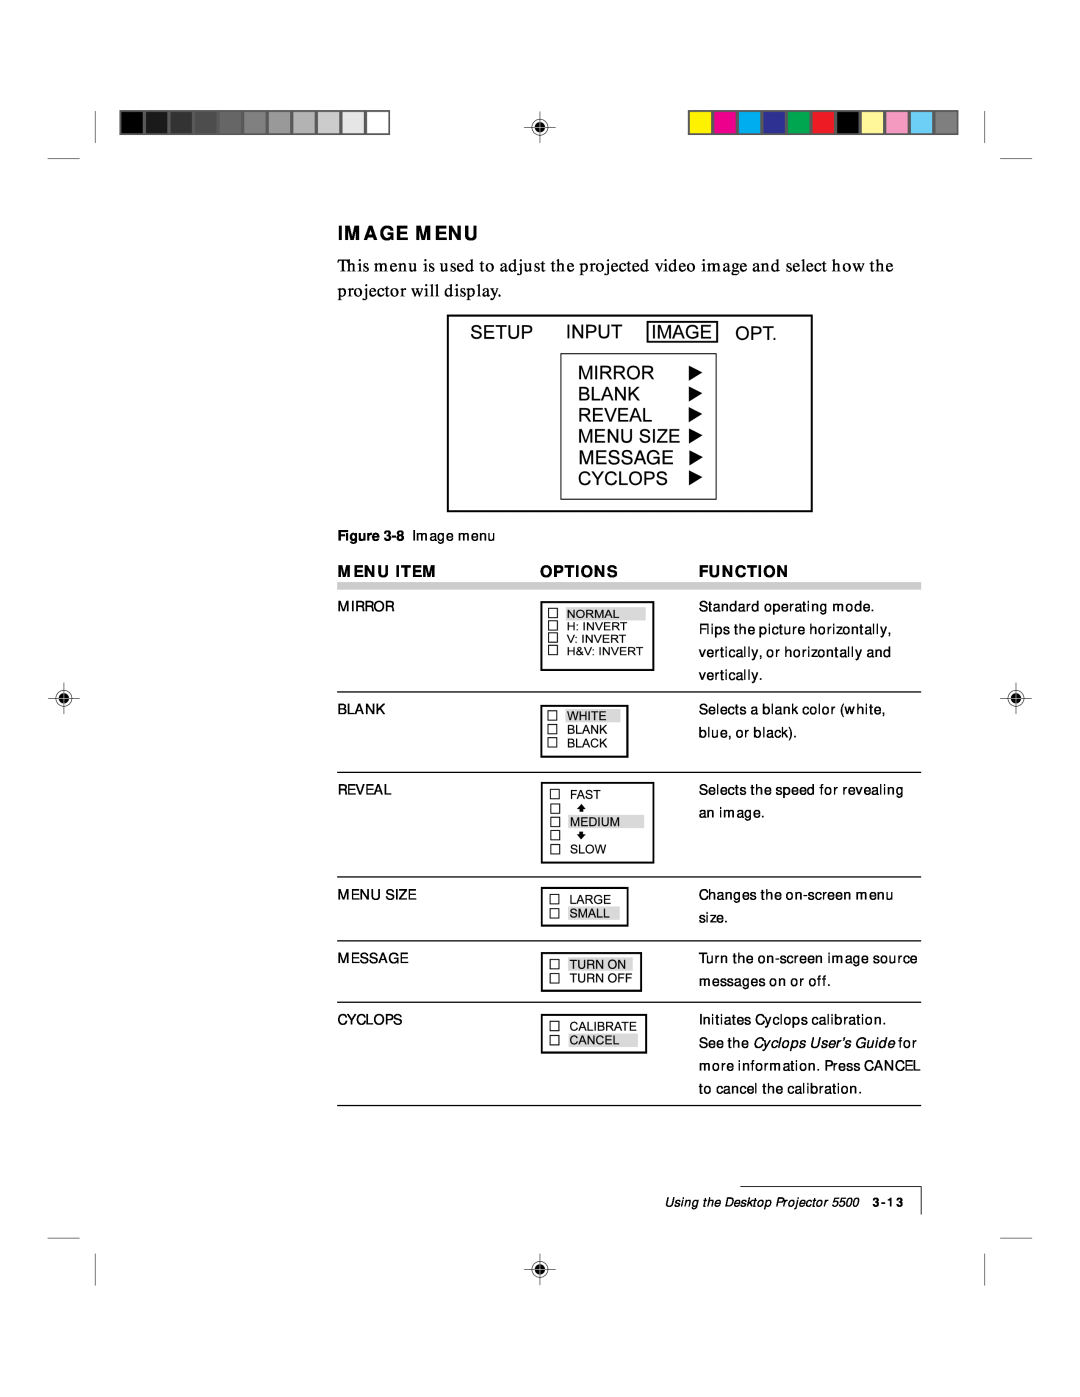 Proxima ASA DP5500 manual Image Menu, Menu Item, Options, Function, 8 Image menu 